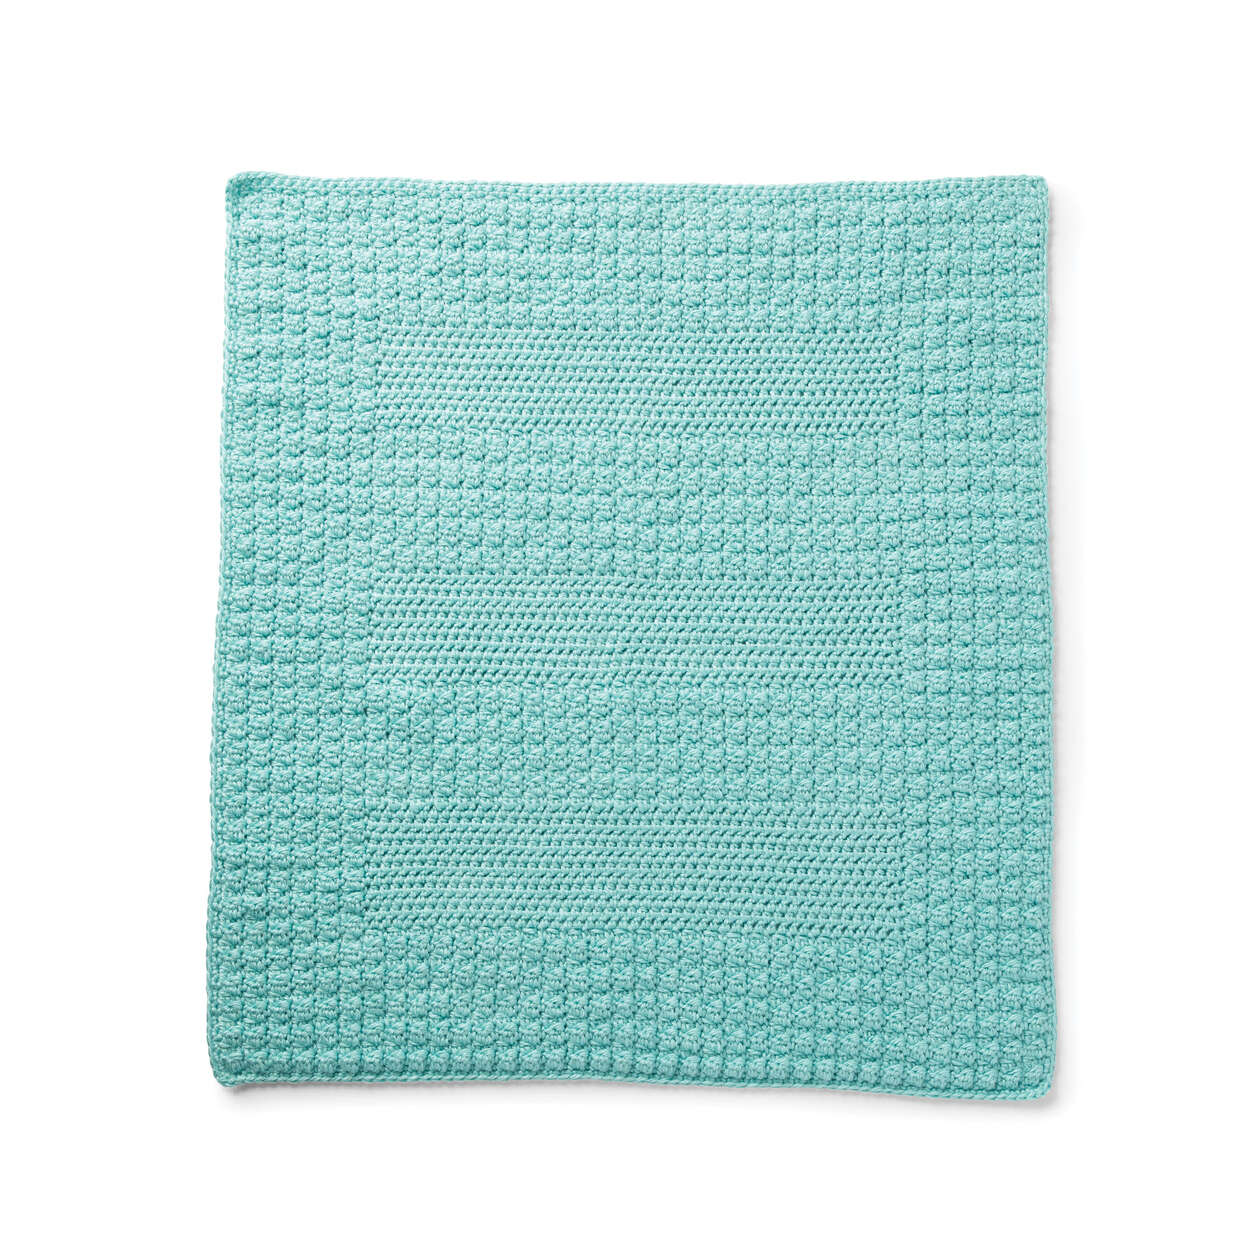 Free Bernat Textured Crochet Baby Blanket Pattern